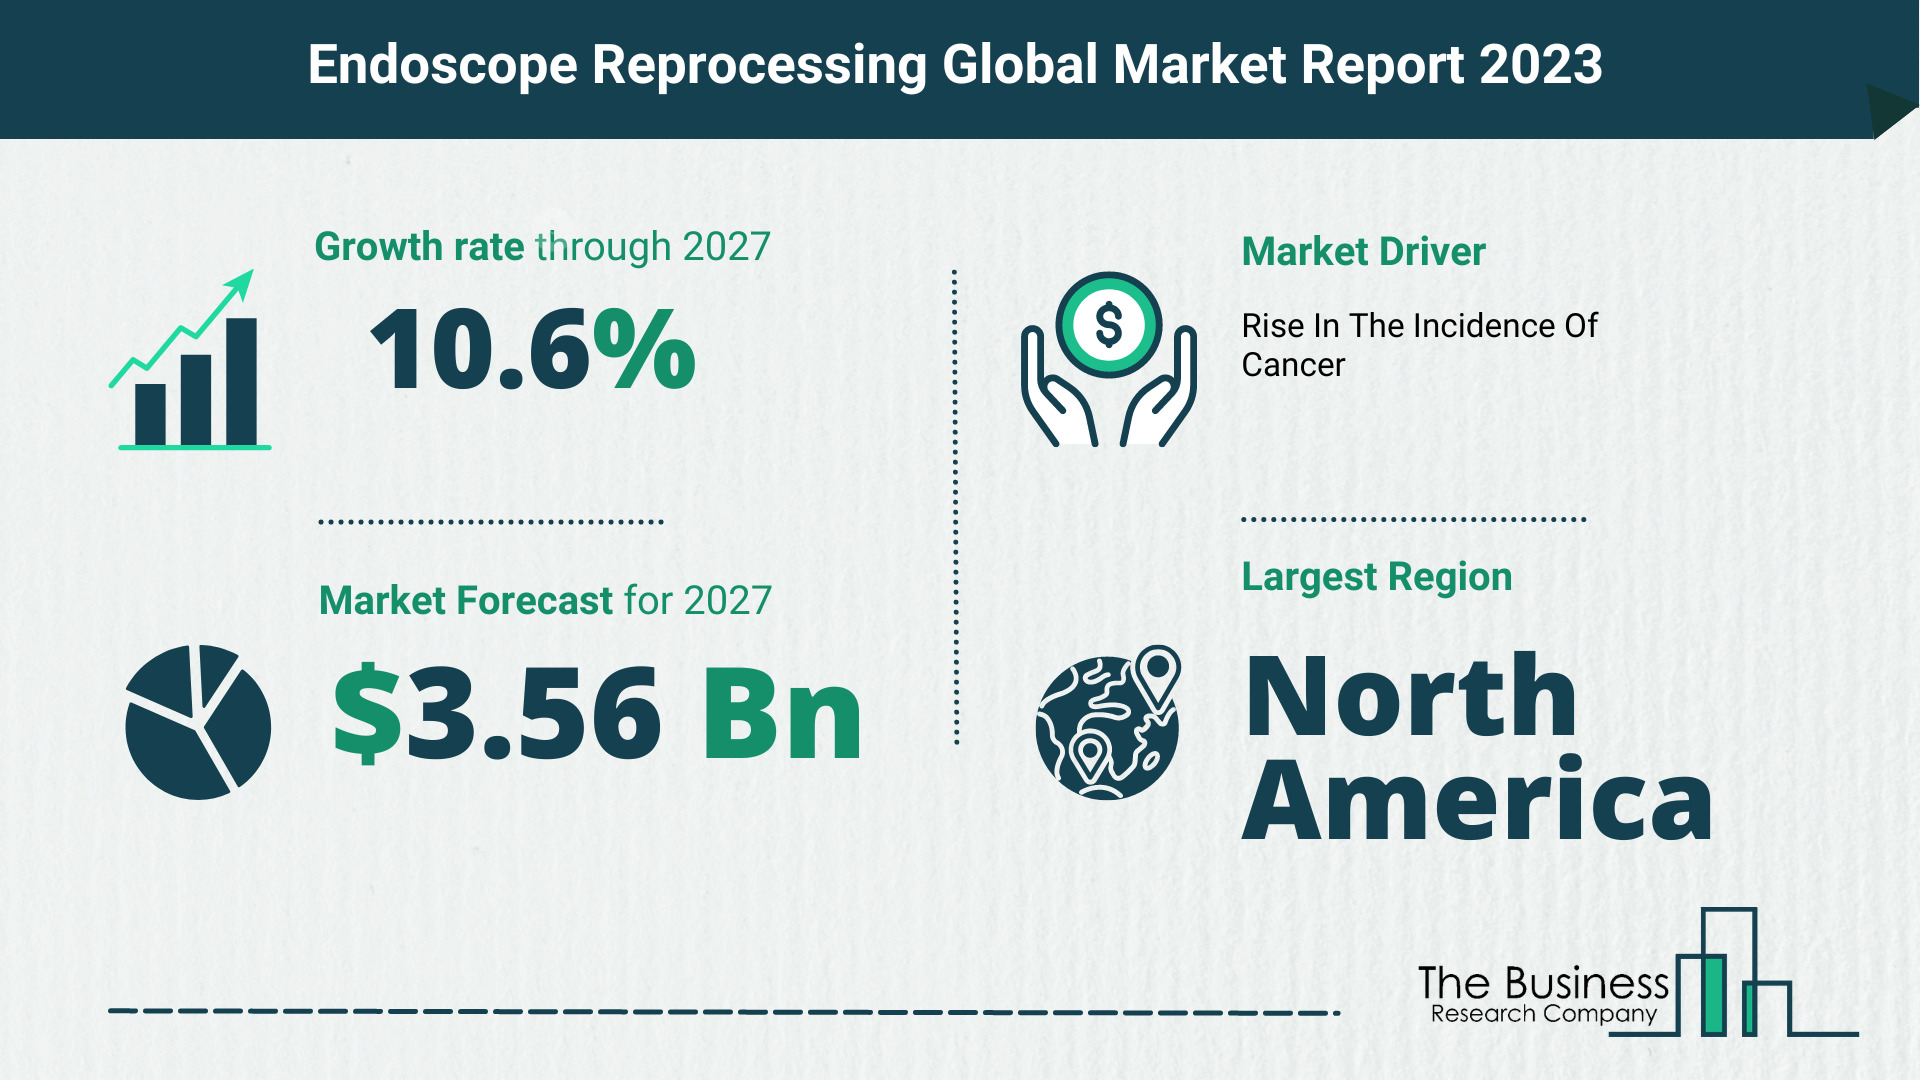 Global Endoscope Reprocessing Market